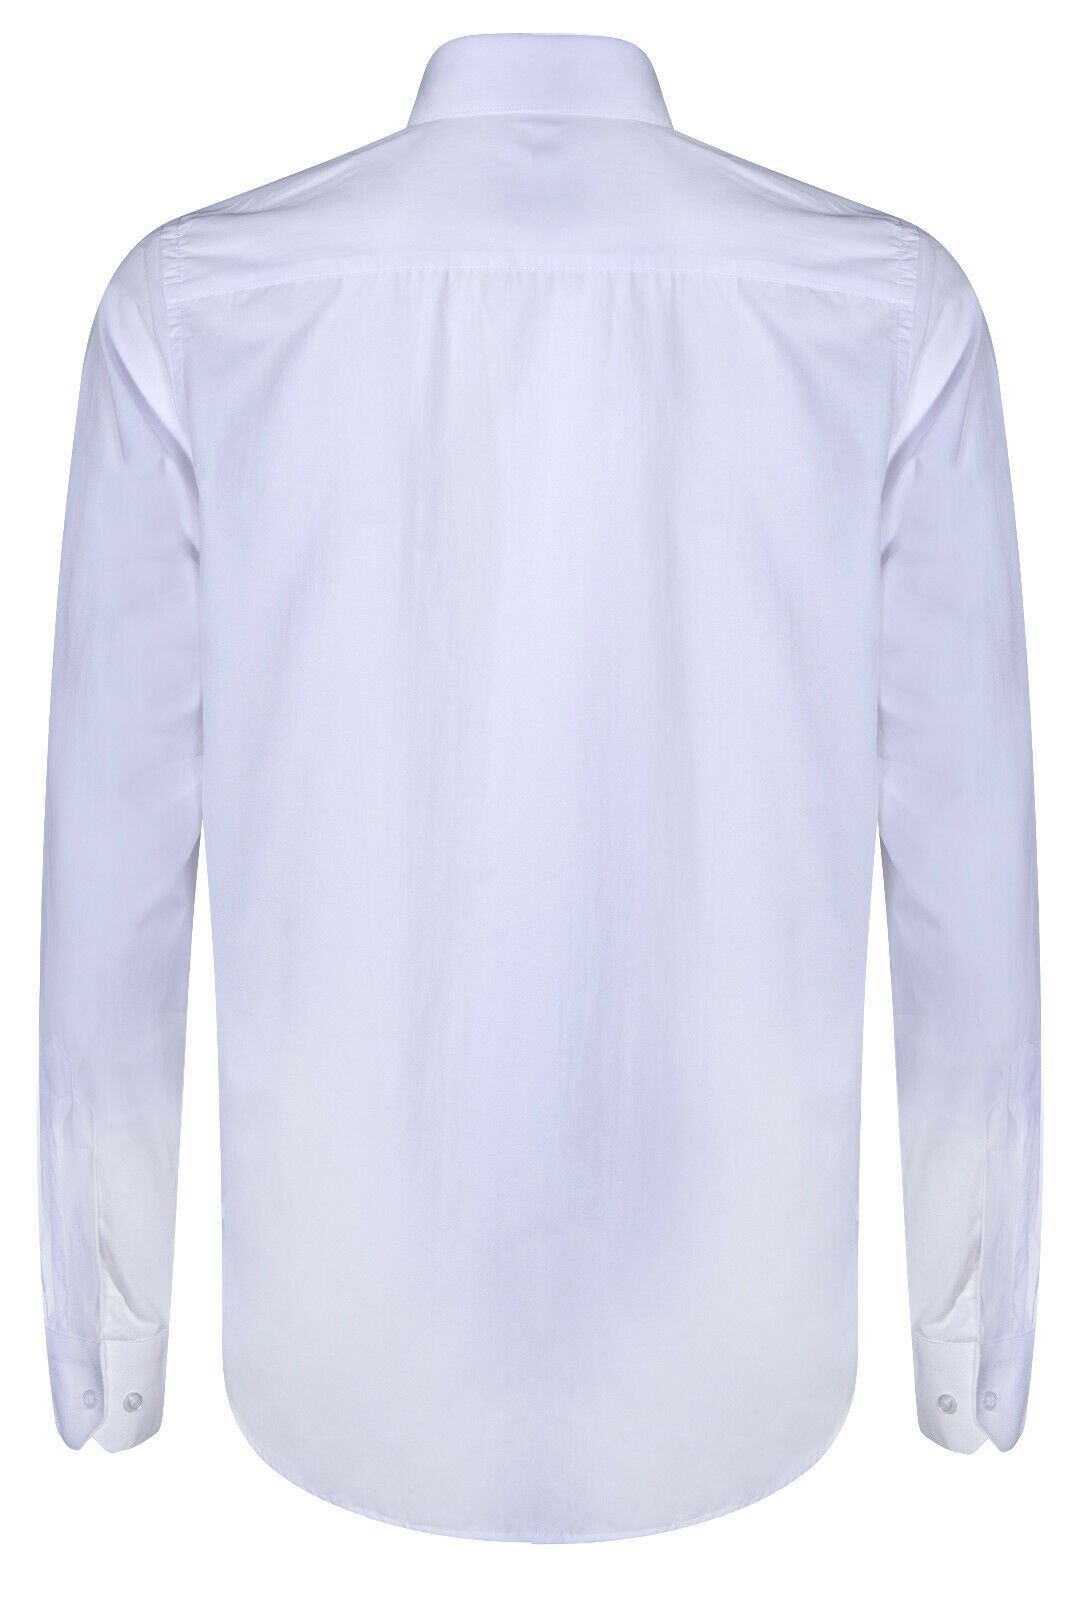 Mens Club Collar White Shirt 1920s Peaky Blinders With Bar Poplin Pin Smart - Upperclass Fashions 